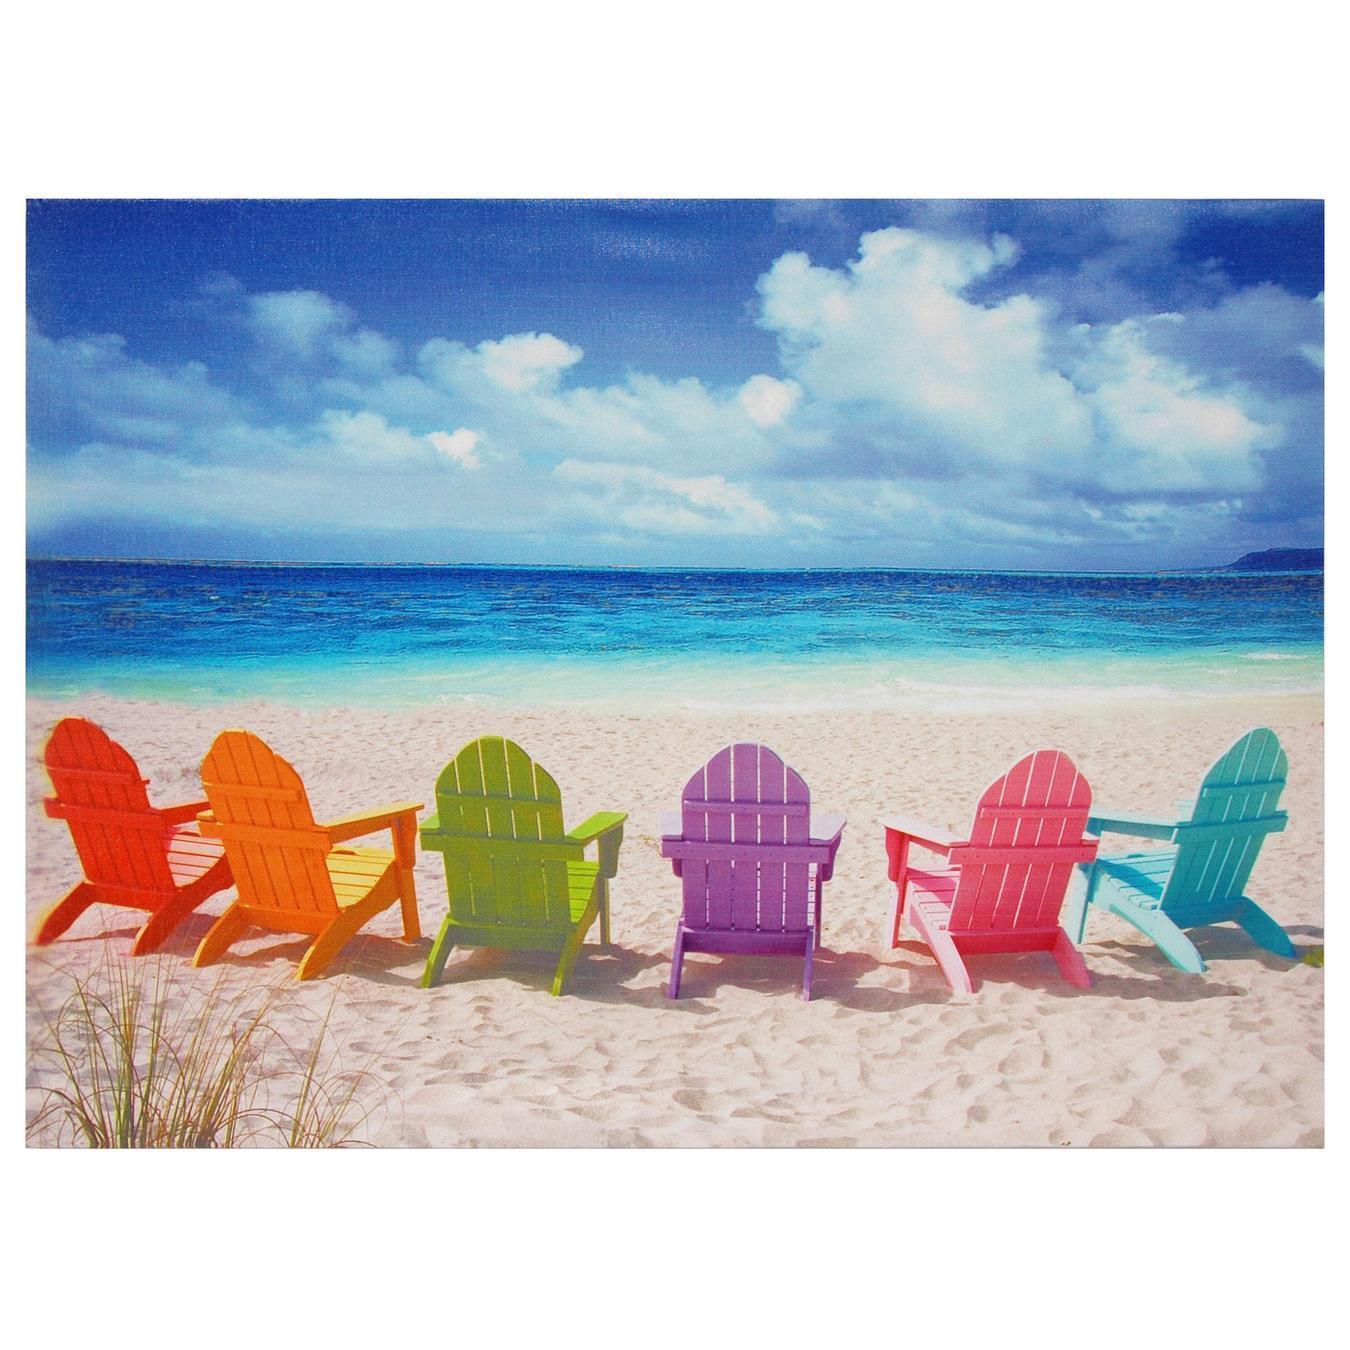 New Beach Chair Desktop Wallpaper with Simple Decor